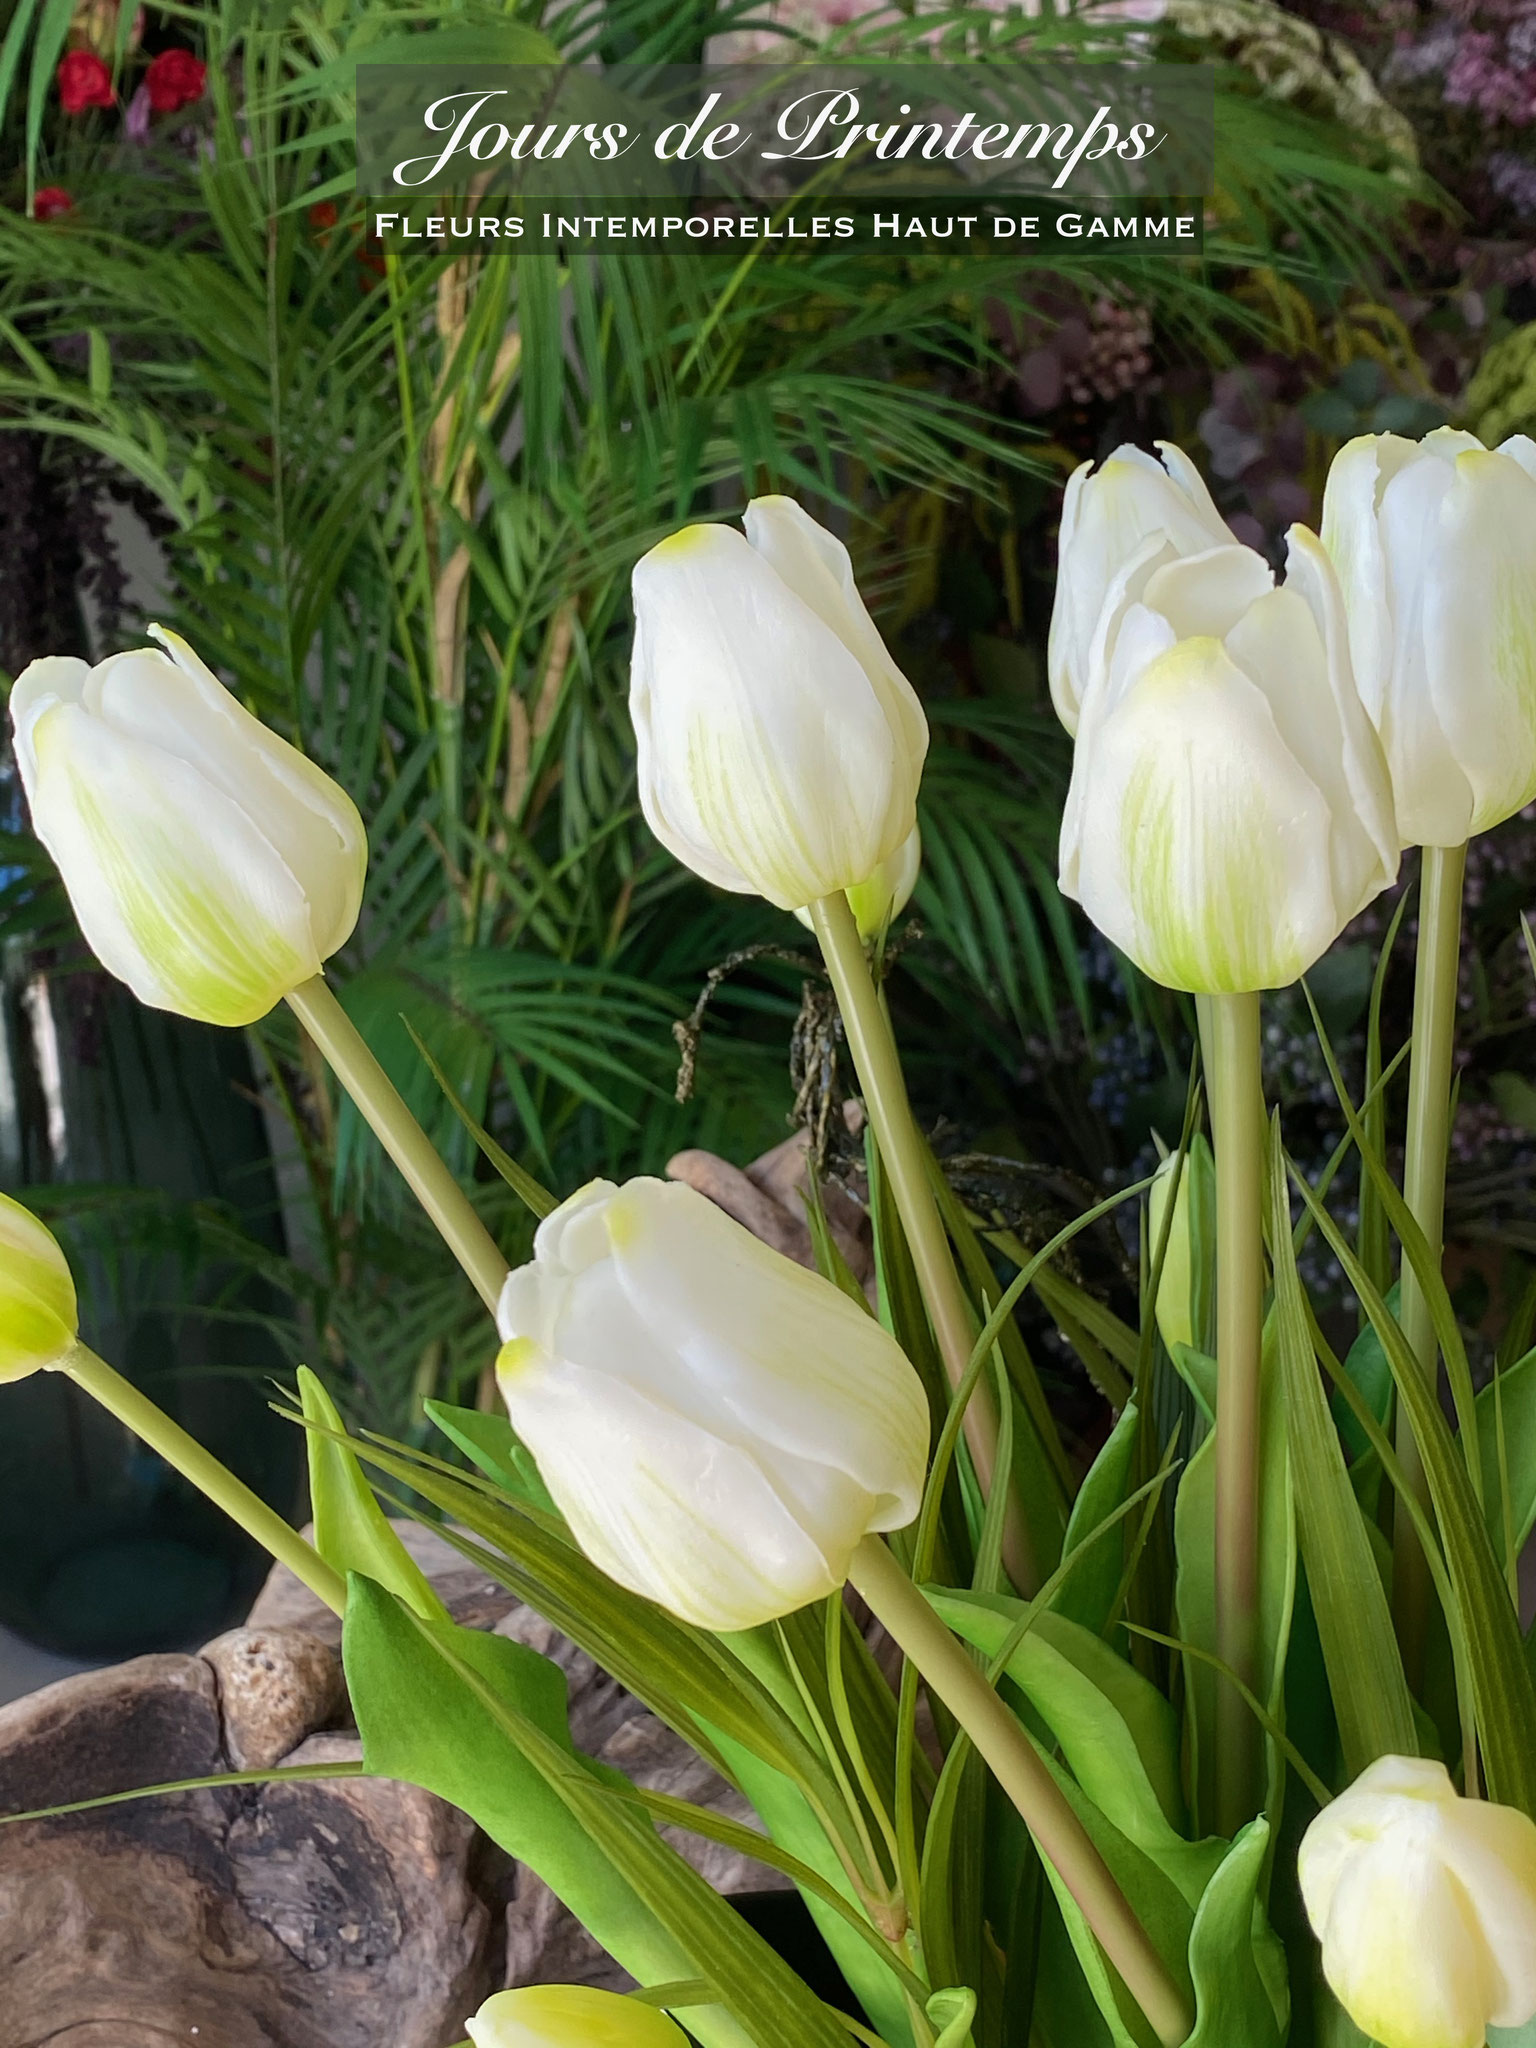 Tulipes artificielles Haut de gamme